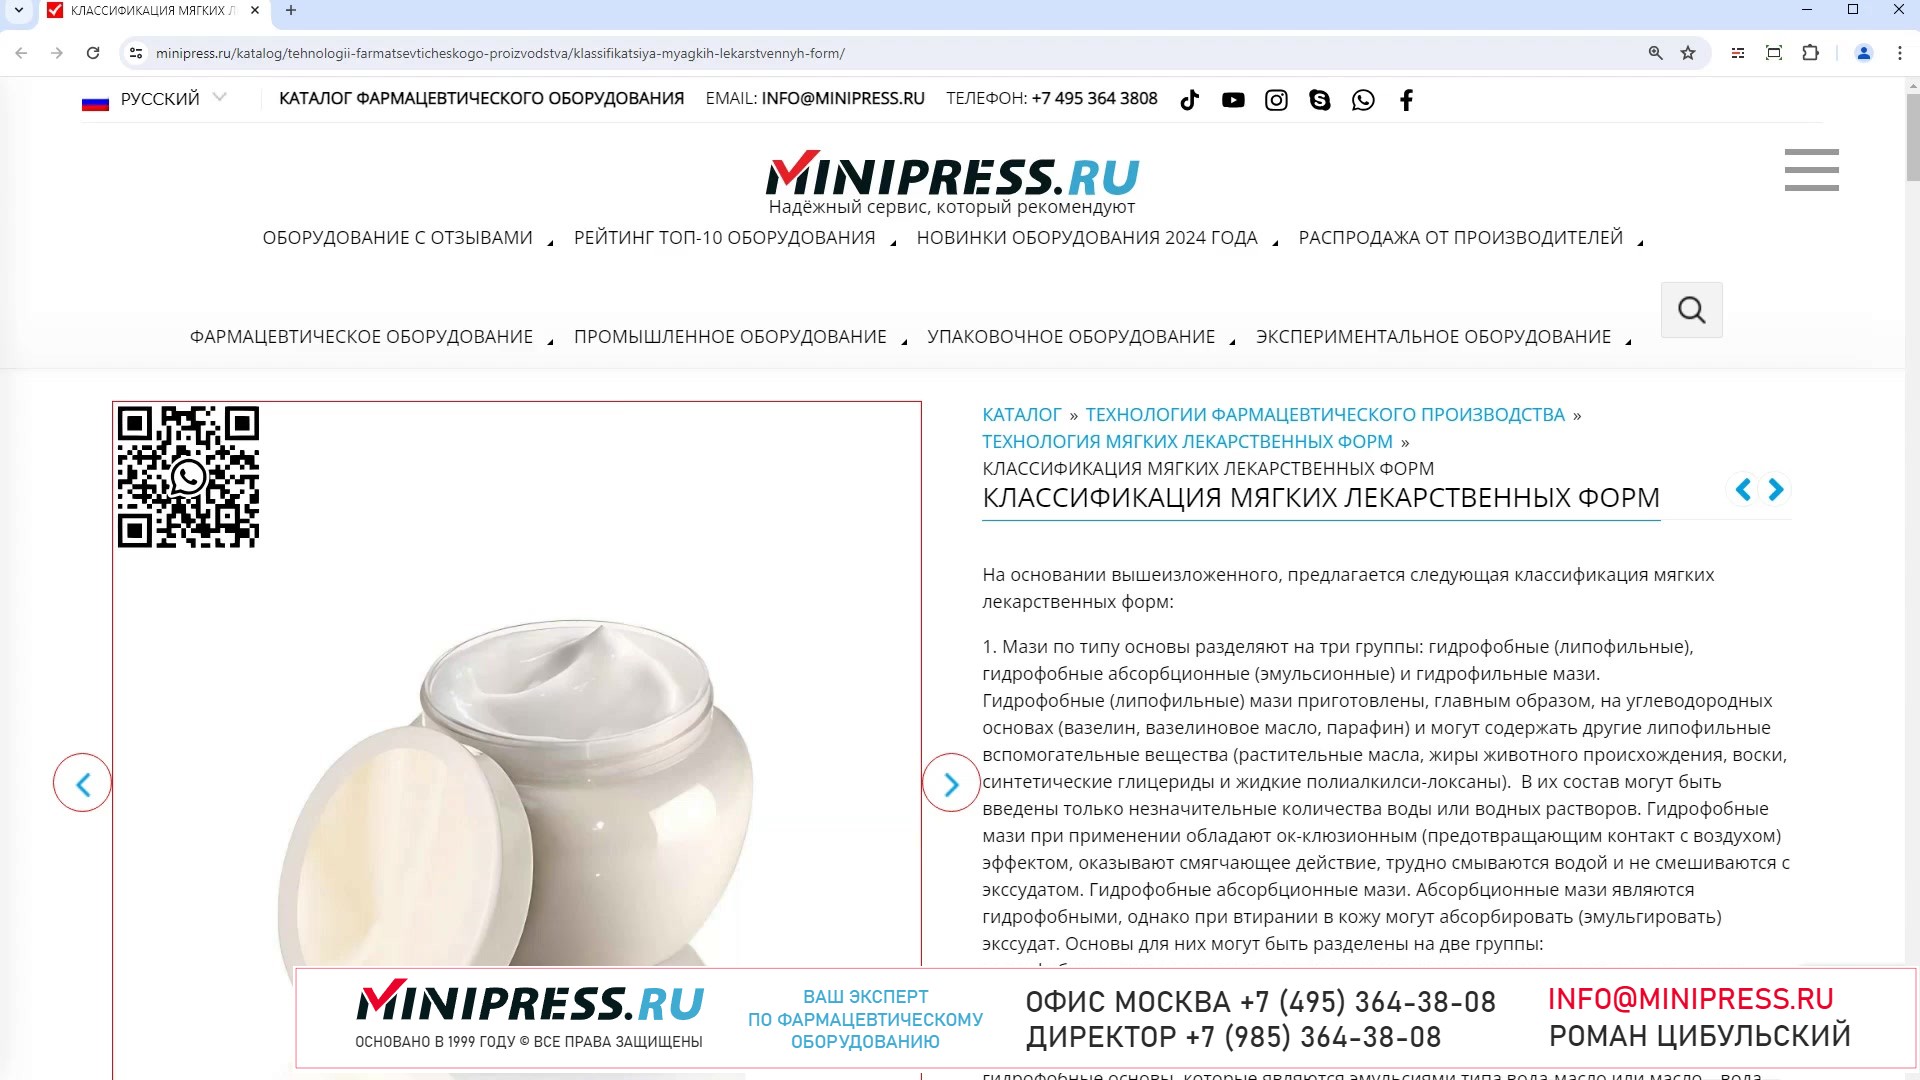 Minipress.ru Классификация мягких лекарственных форм